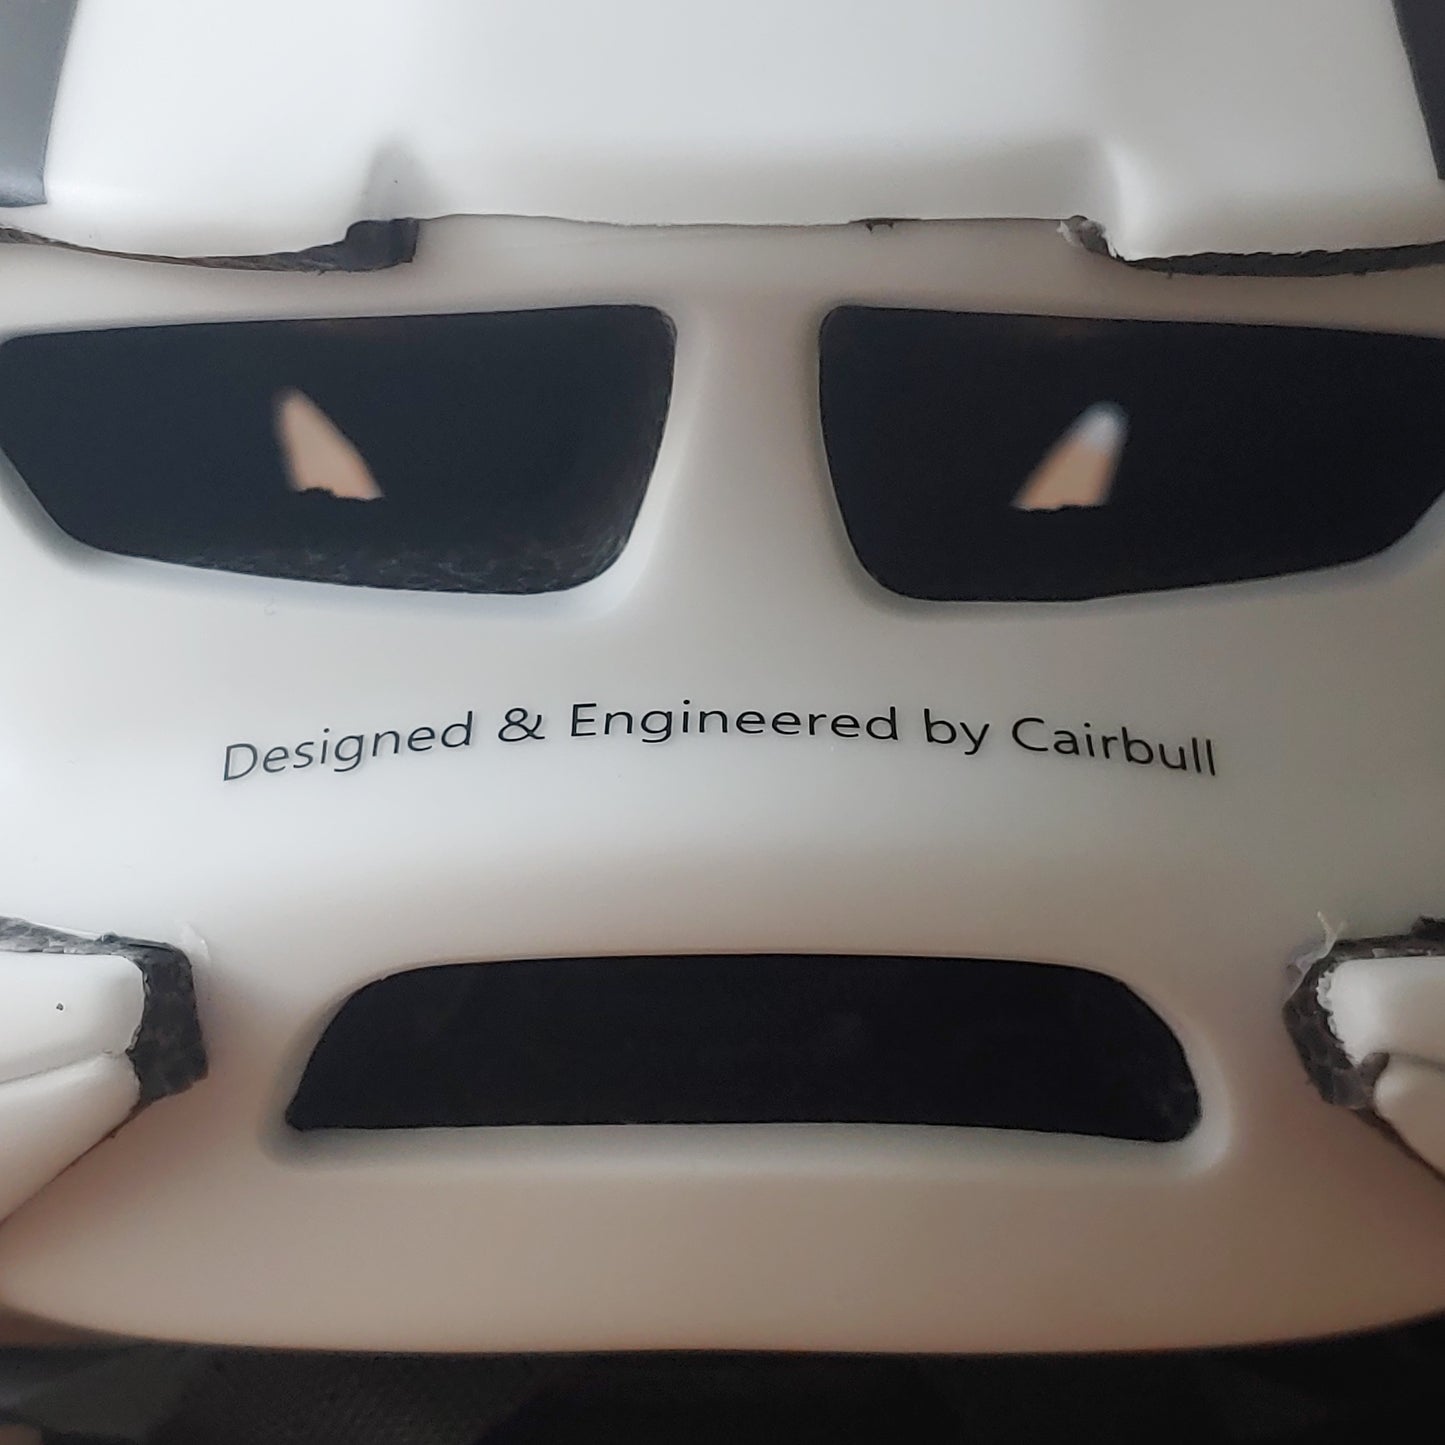 Casco Cairbull de carreras aerodinámico blanco con gafas para ciclismo